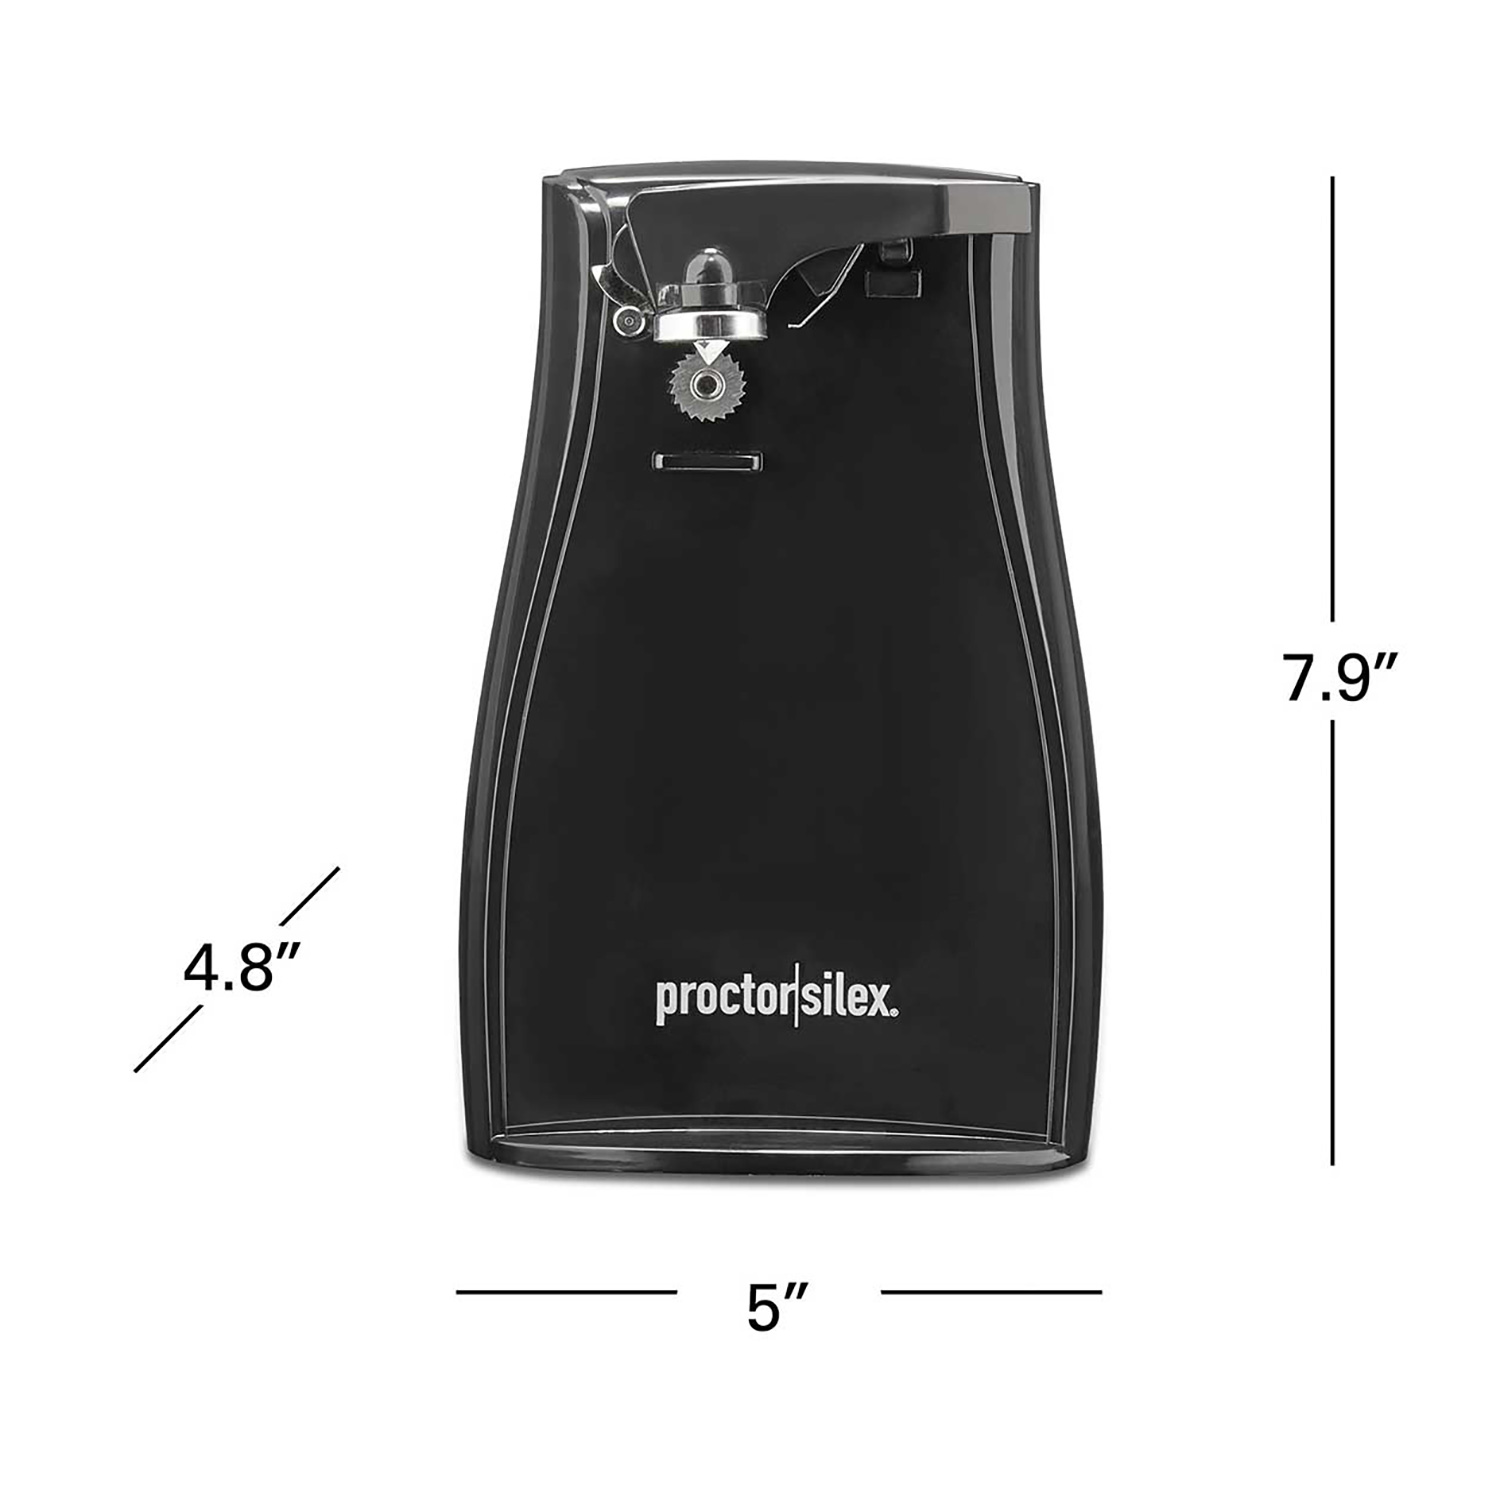 Proctor Silex 75400 PowerOpener Under-The-Cabinet Can Opener